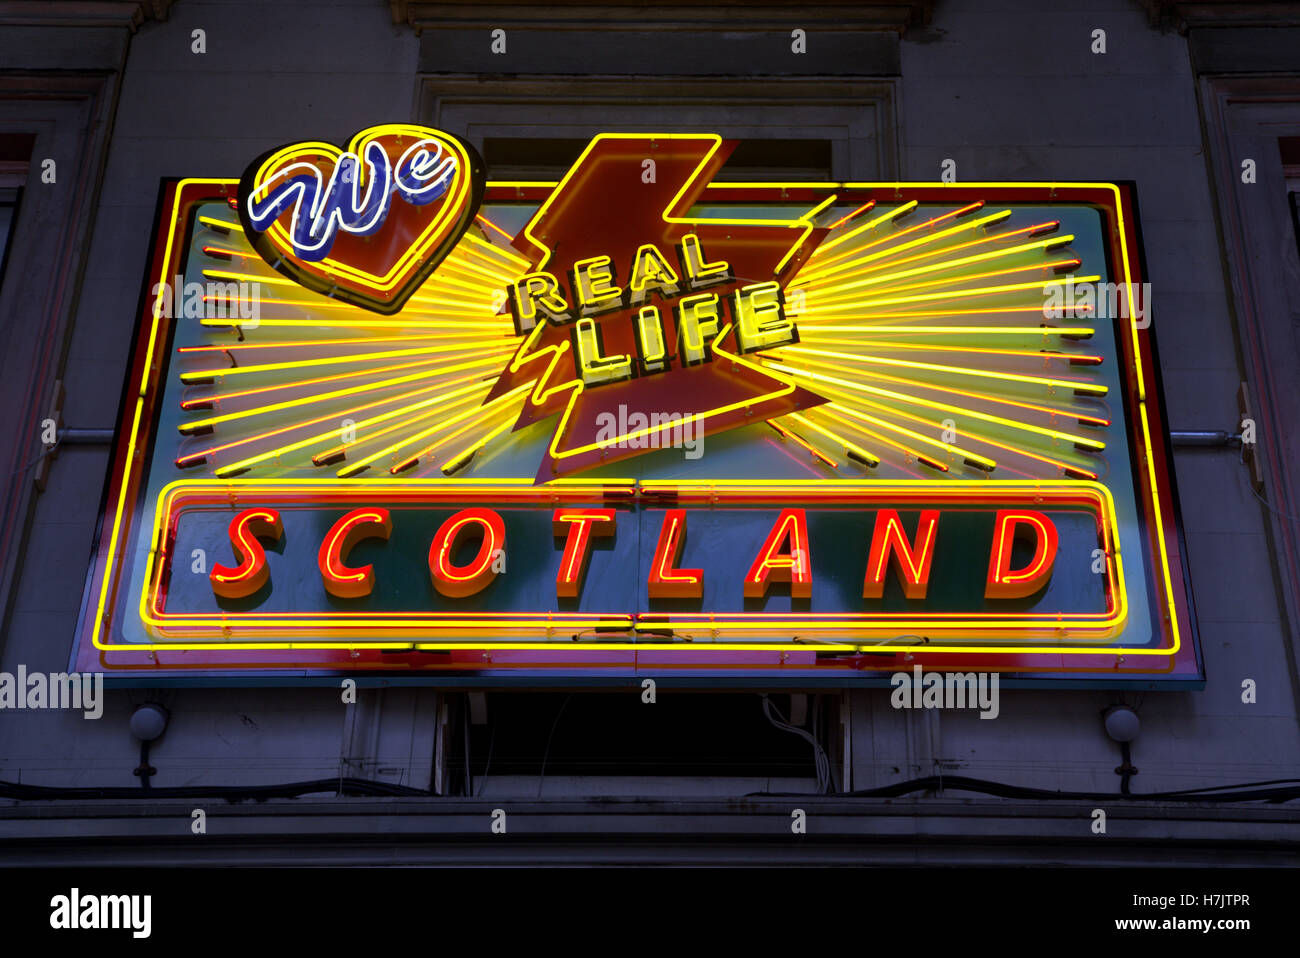 we love real life Scotland outside museum neon exhibit Stock Photo